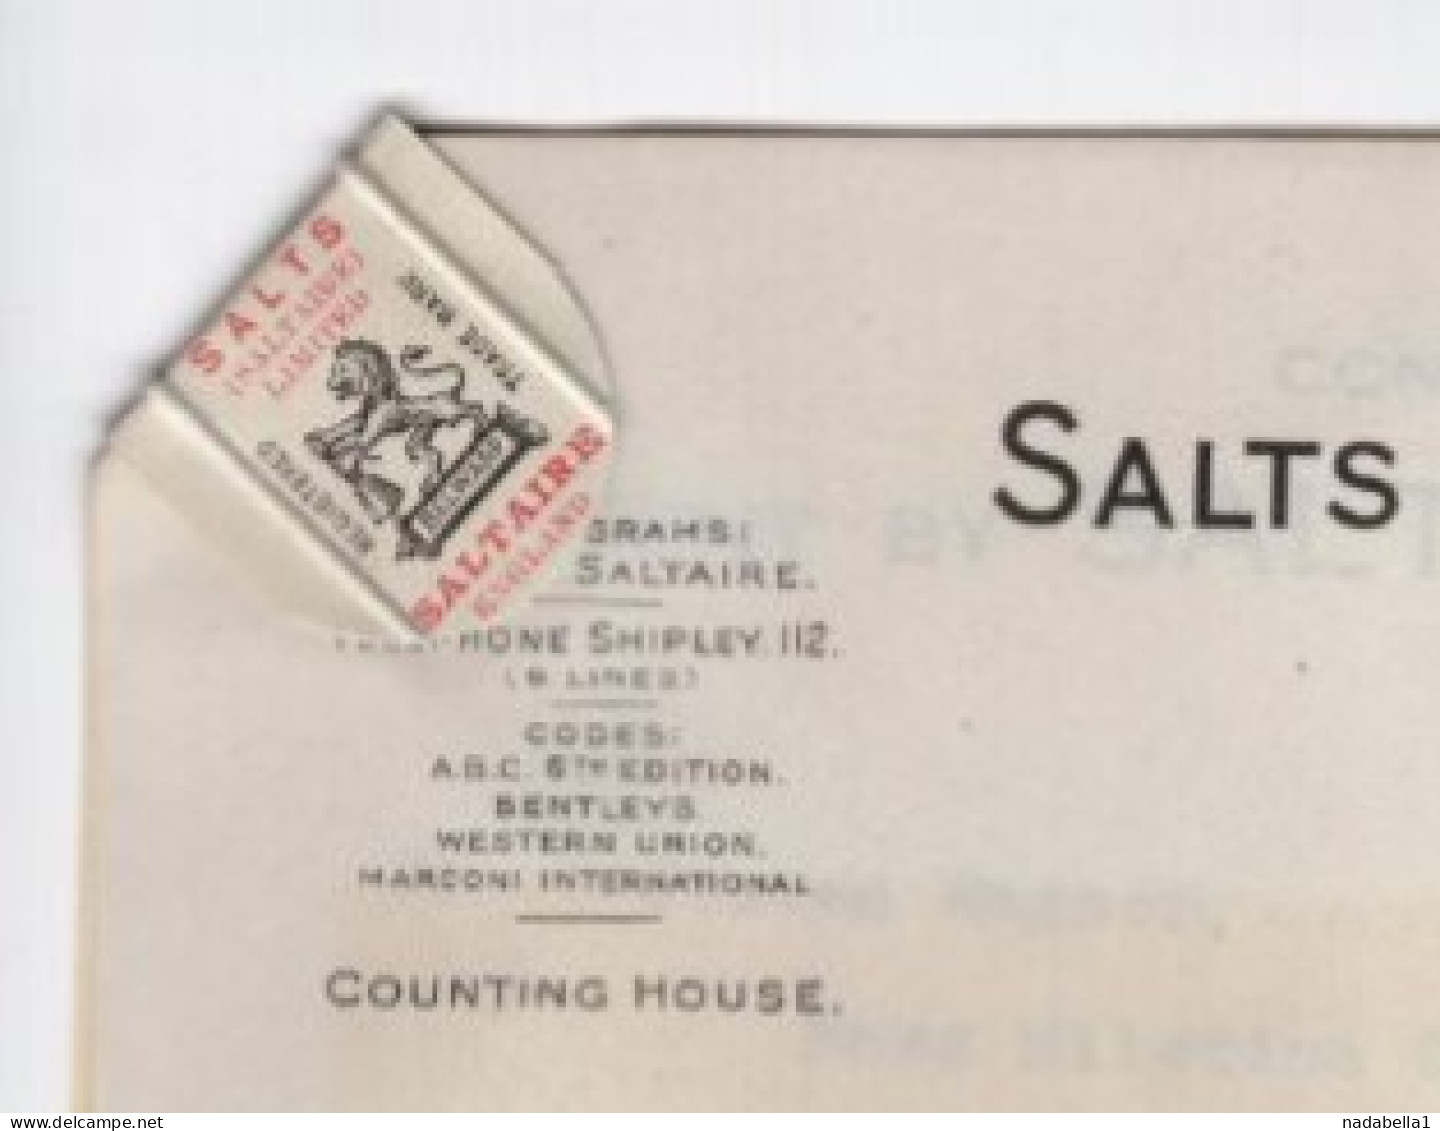 1925.  UNITED KINGDOM,SALTAIRE,SHIPLEY,SALTS LTD. LETTERHEAD,SENT TO SERBIA,TELEGRAM ATTACHED - Royaume-Uni